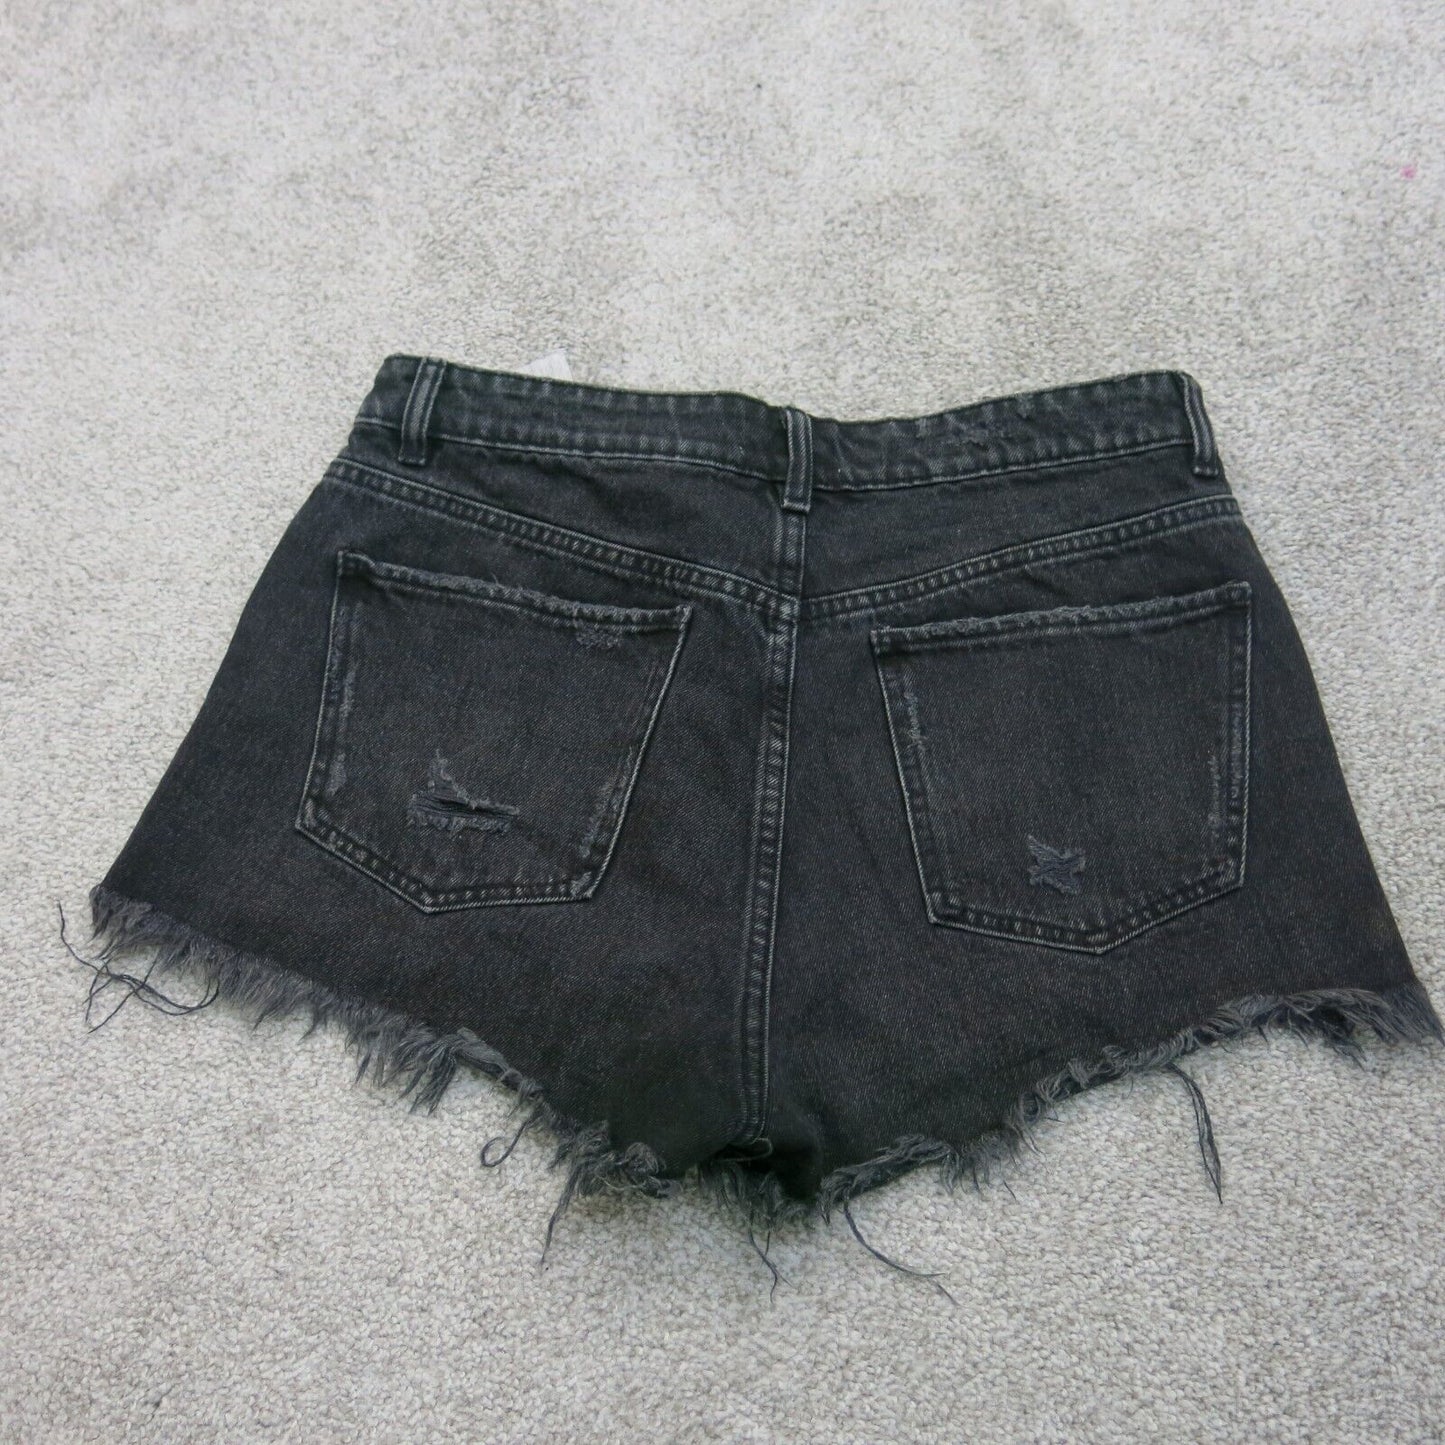 Zara Womens Cut Off Shorts Distressed Denim Stretch Low Rise Black Size US 08